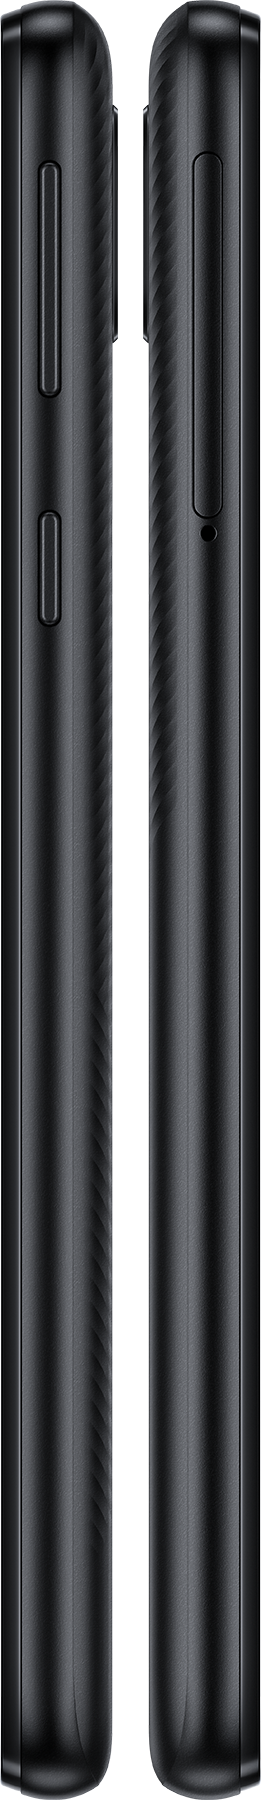 Samsung Galaxy A01 Core SM-A013F 16GB